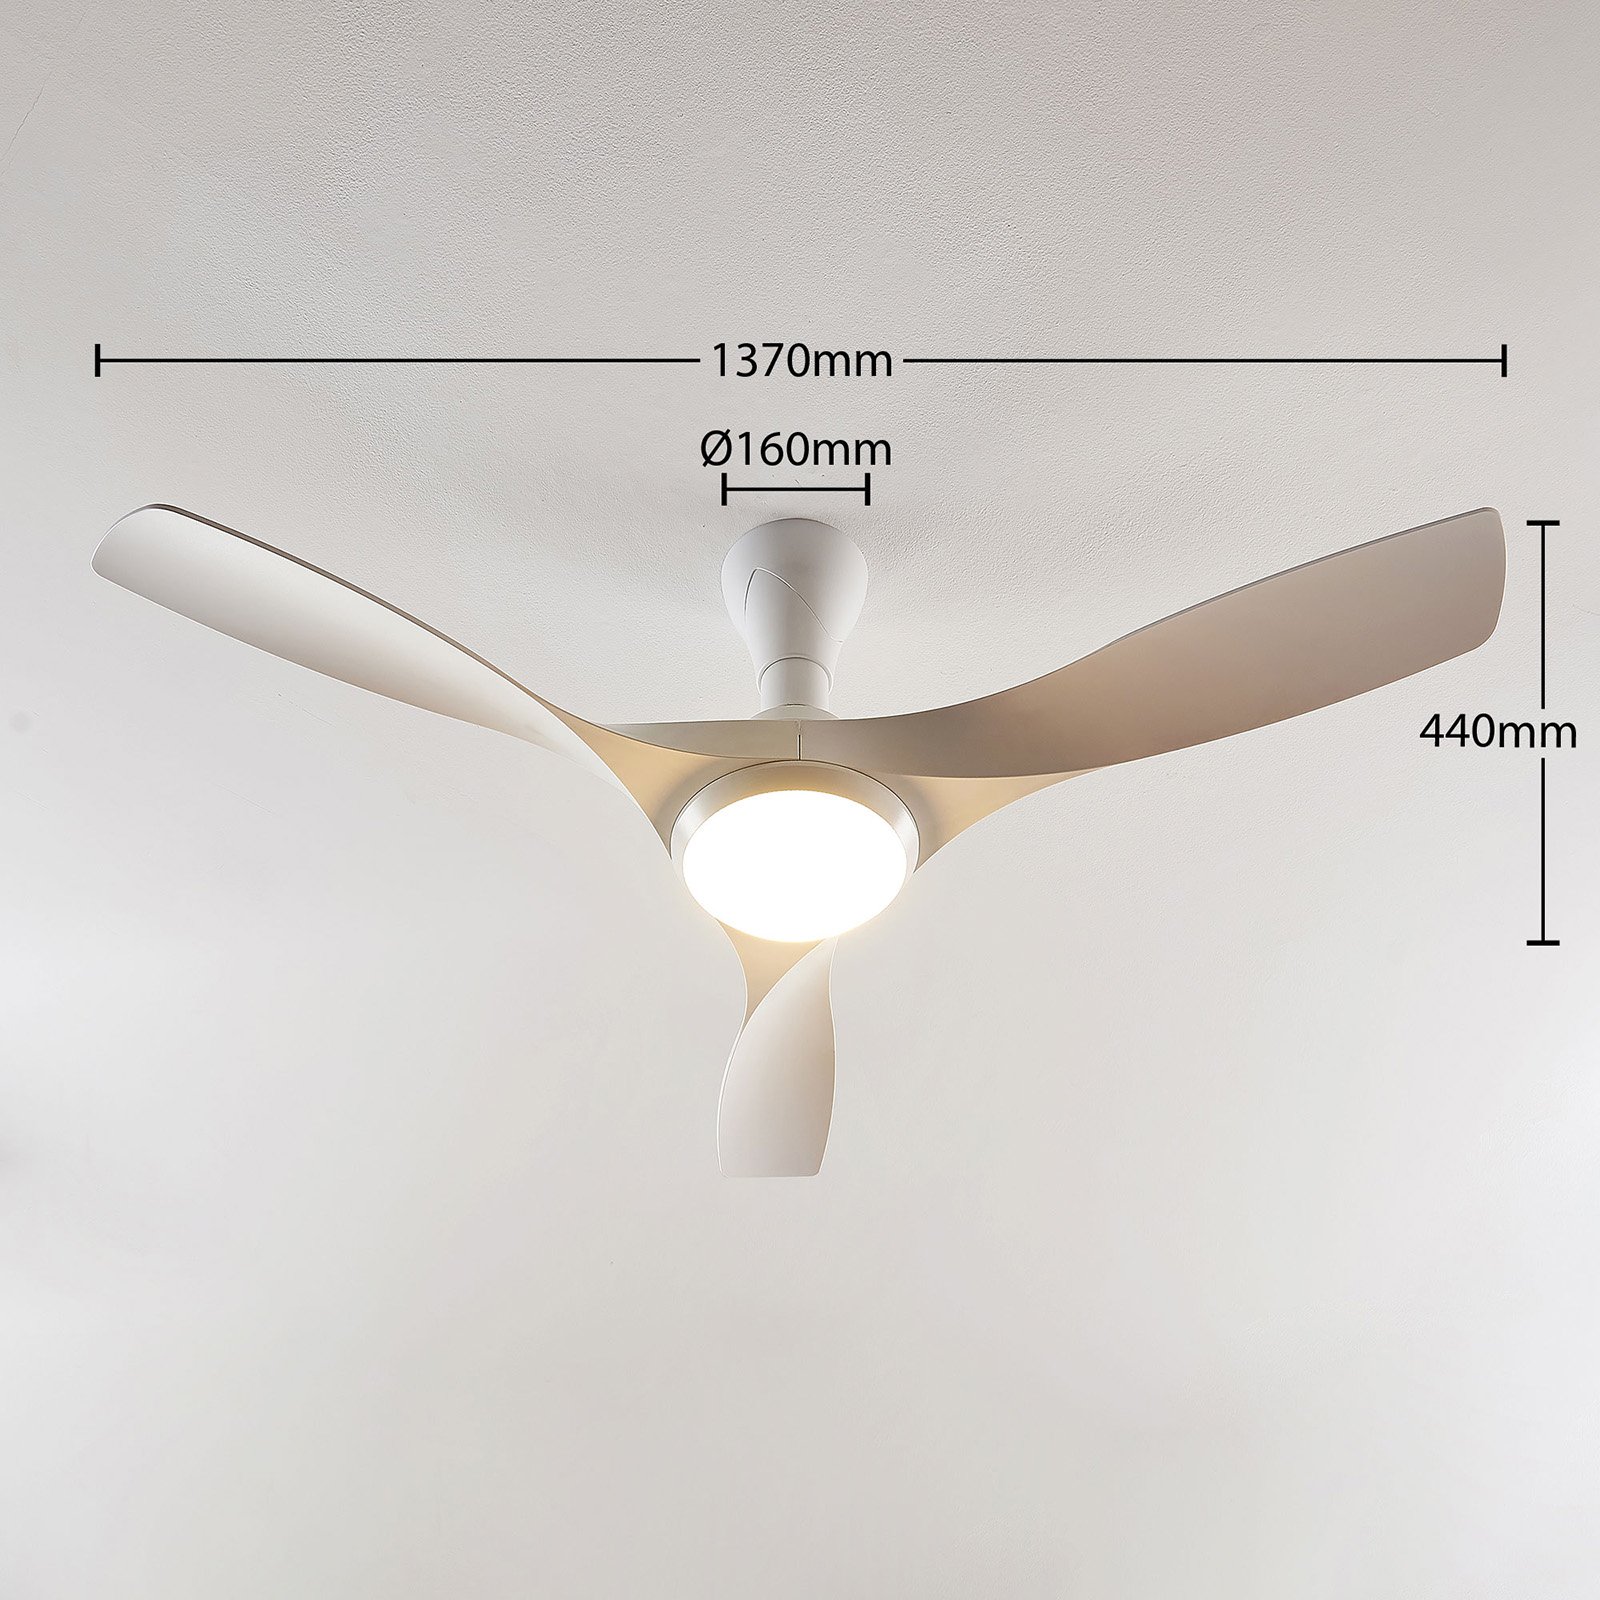 Starluna Borga LED ceiling fan 3 blades, white